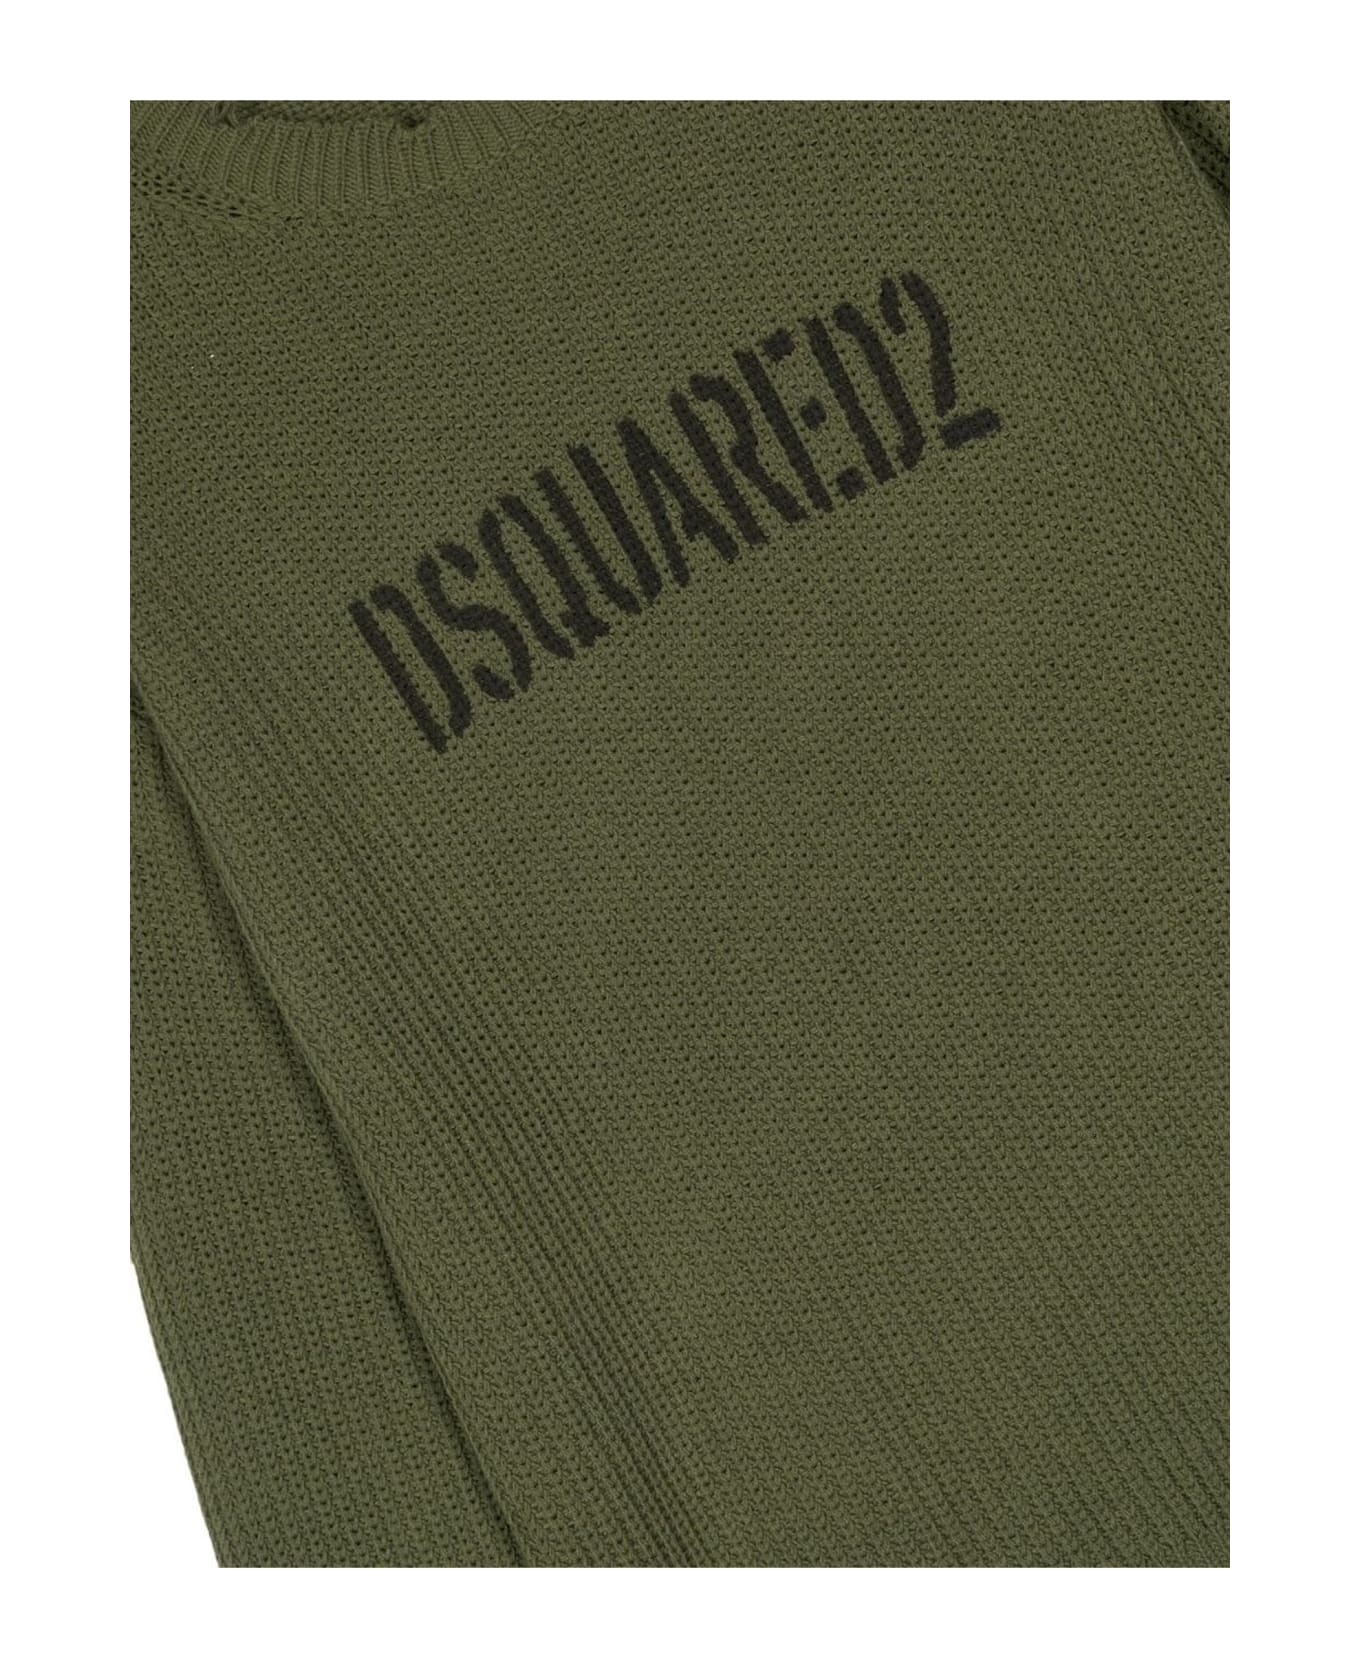 Dsquared2 Sweaters Green - Green ニットウェア＆スウェットシャツ